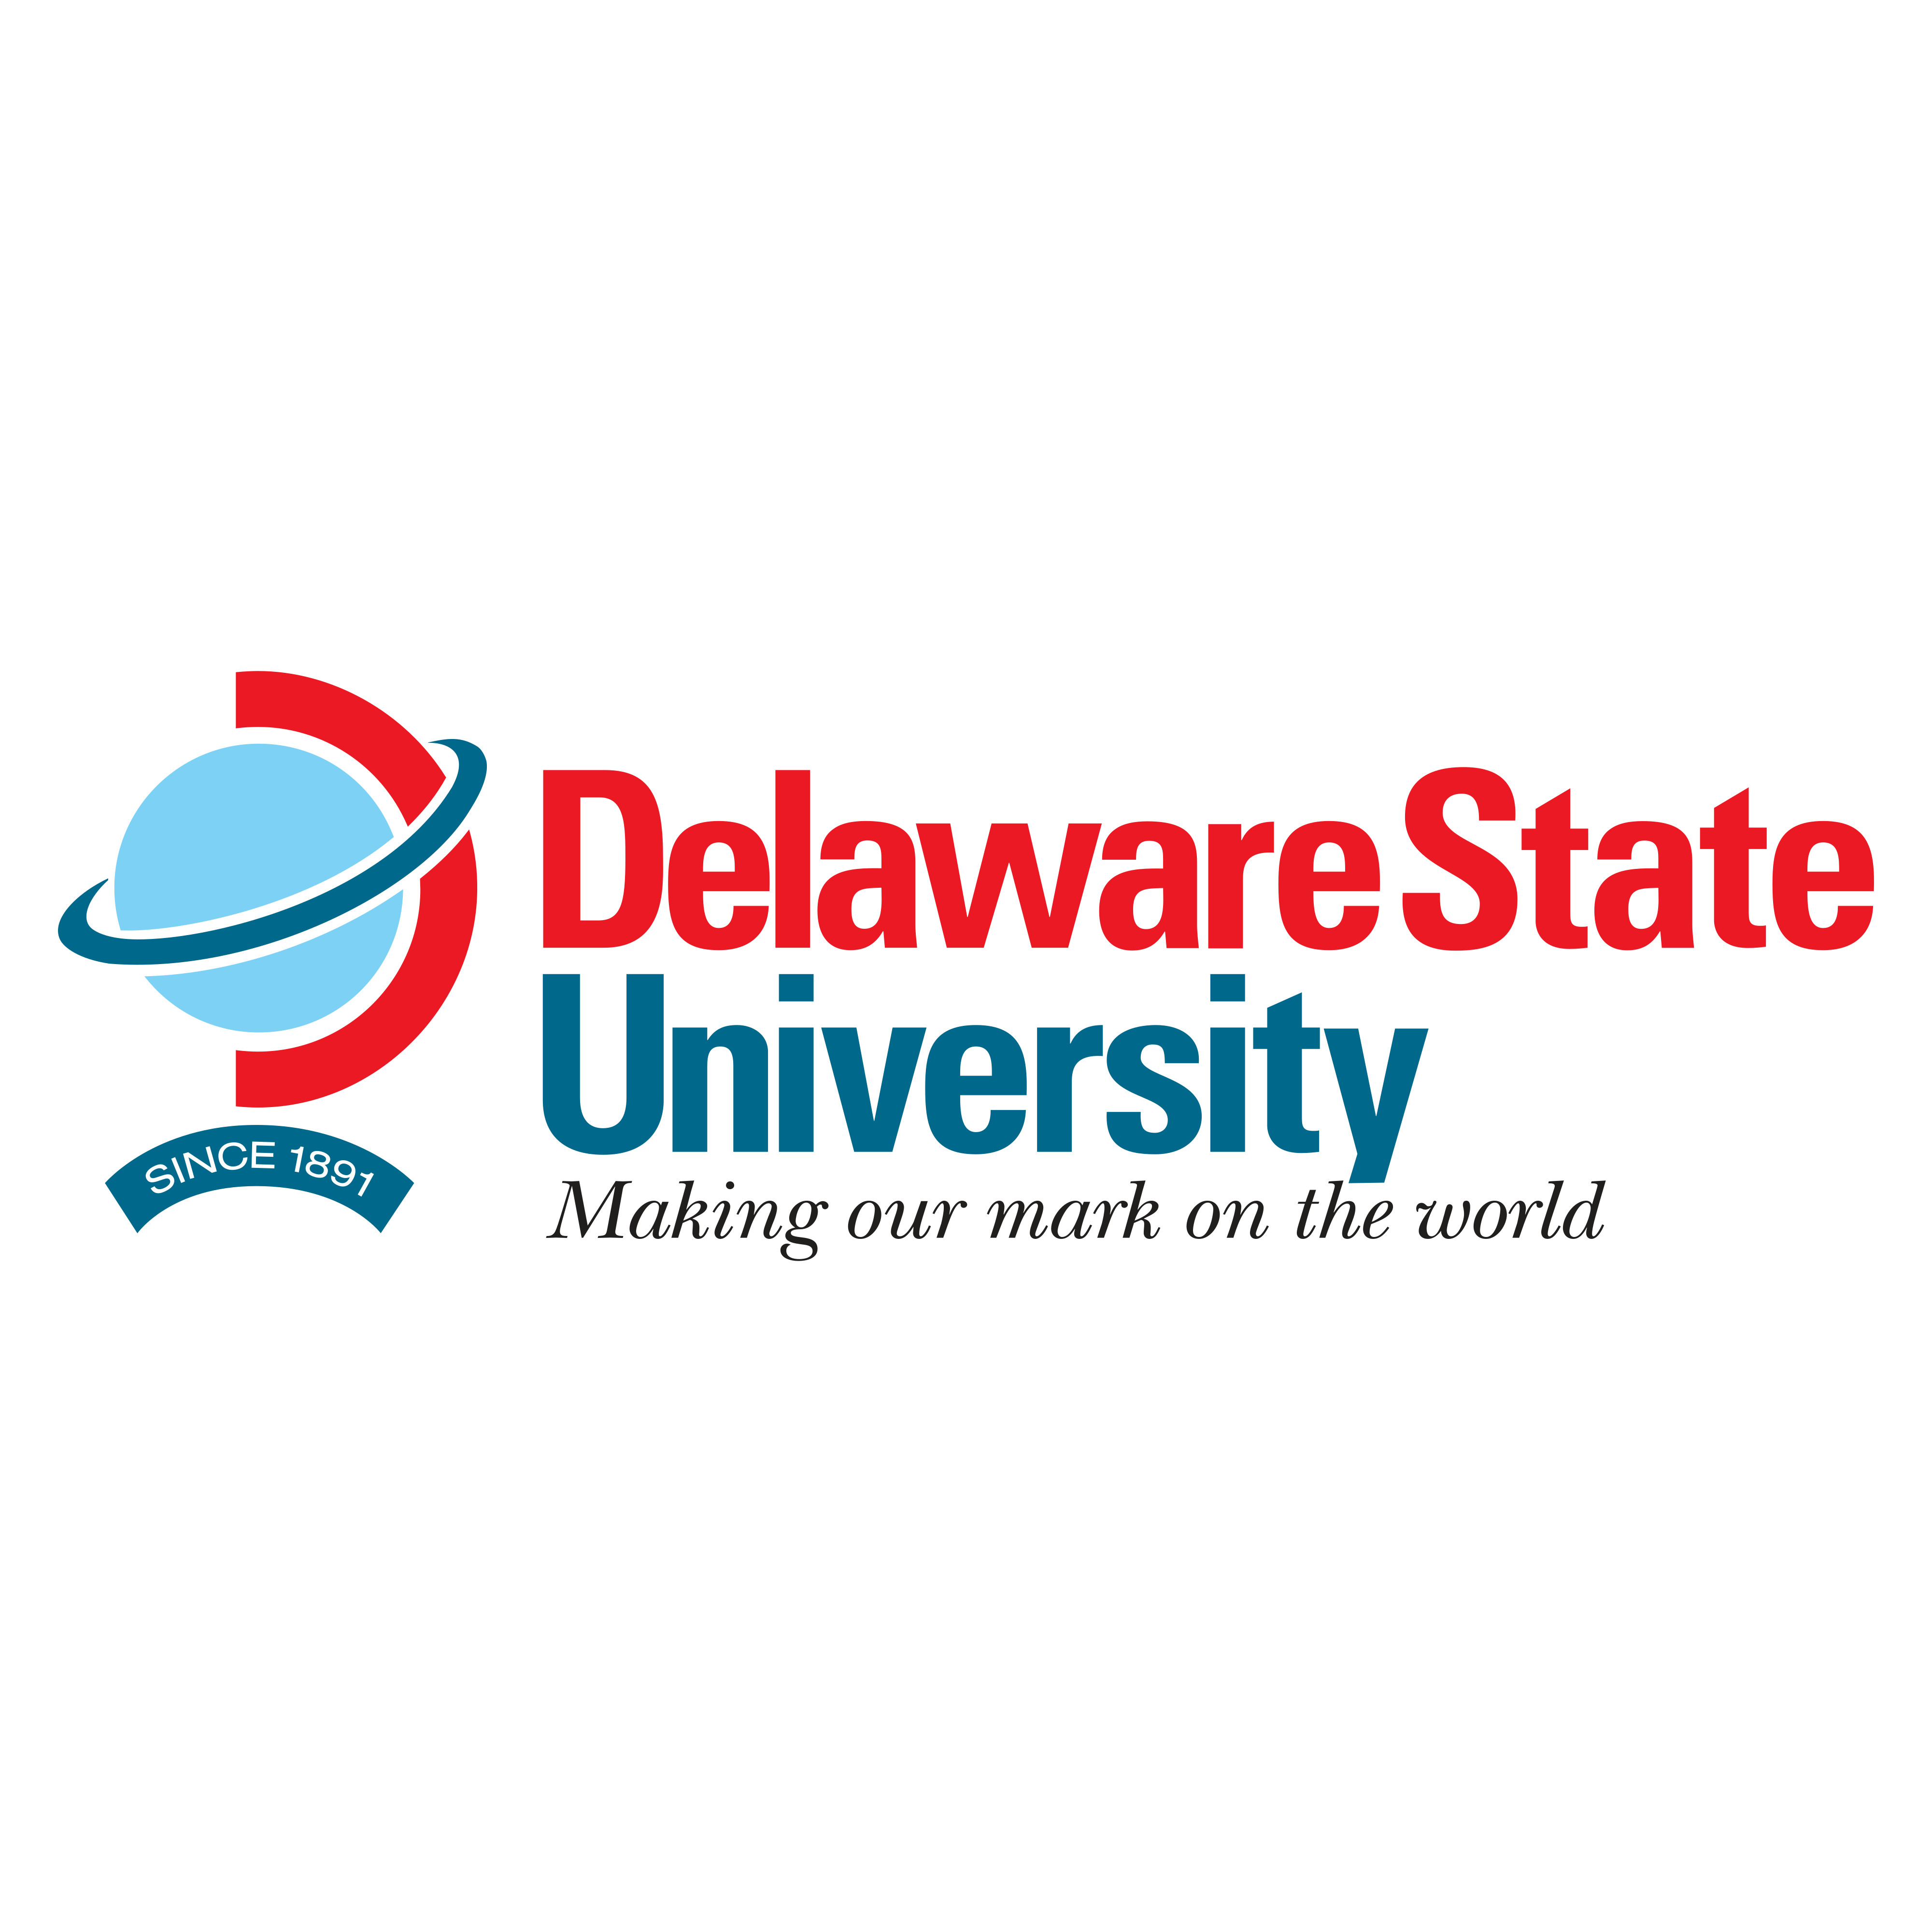 Delaware State University logo download.